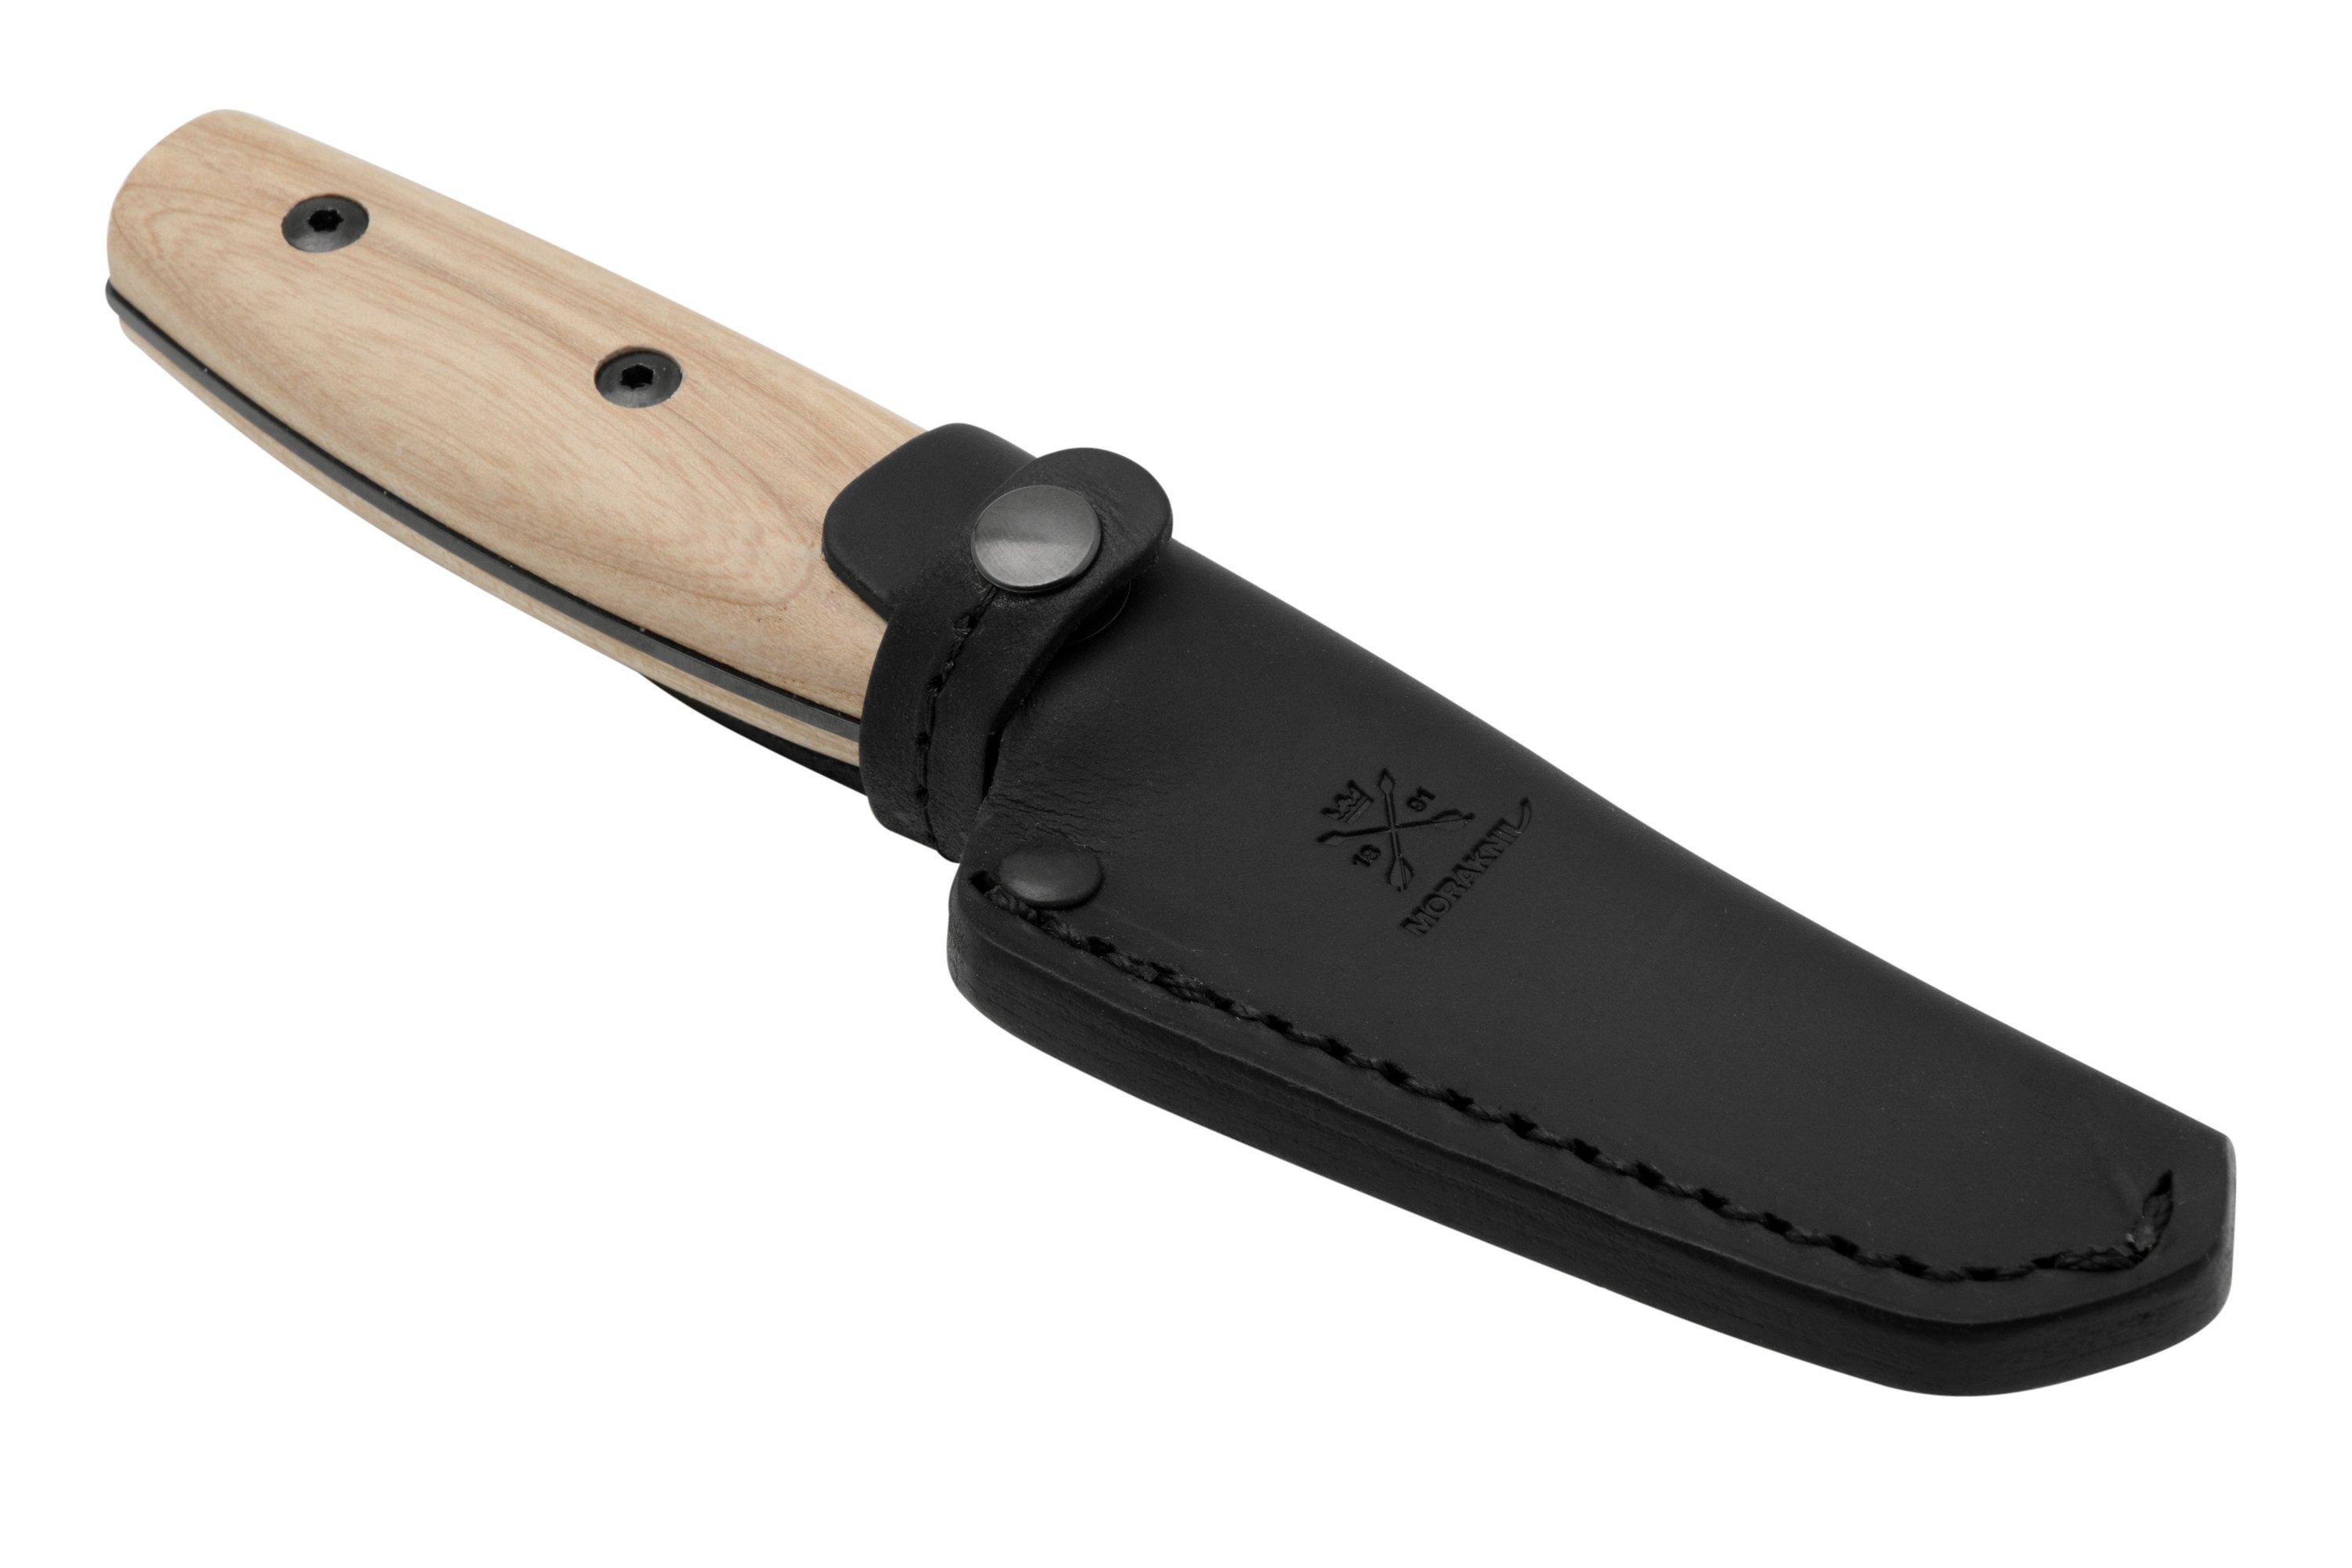 Mora Bushcraft Survival Desert 13033 fixed knife